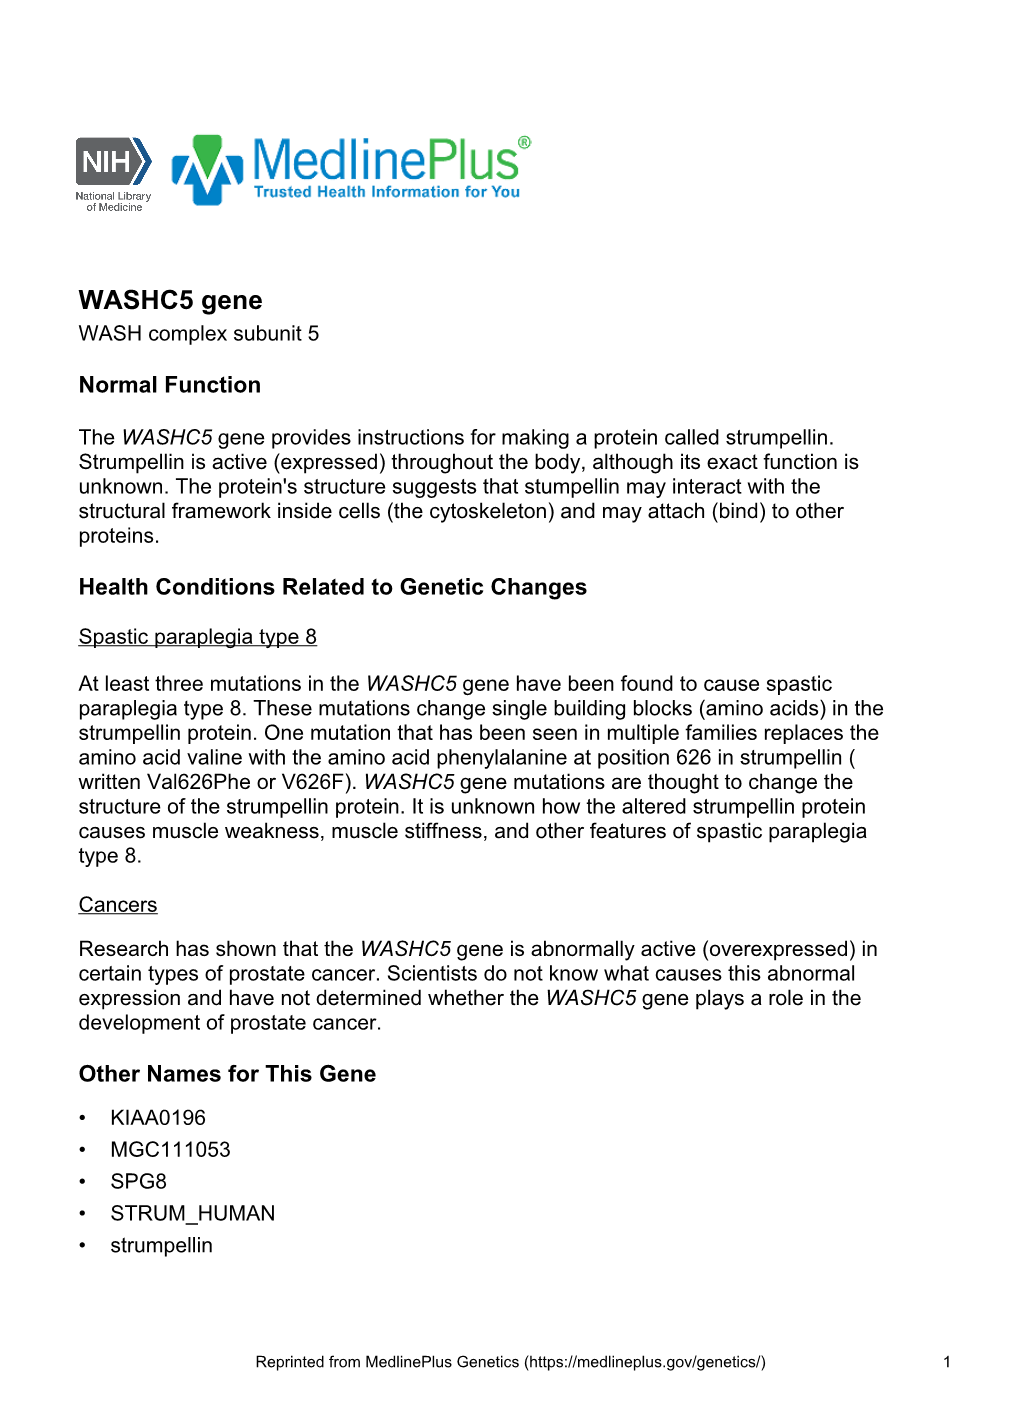 WASHC5 Gene WASH Complex Subunit 5